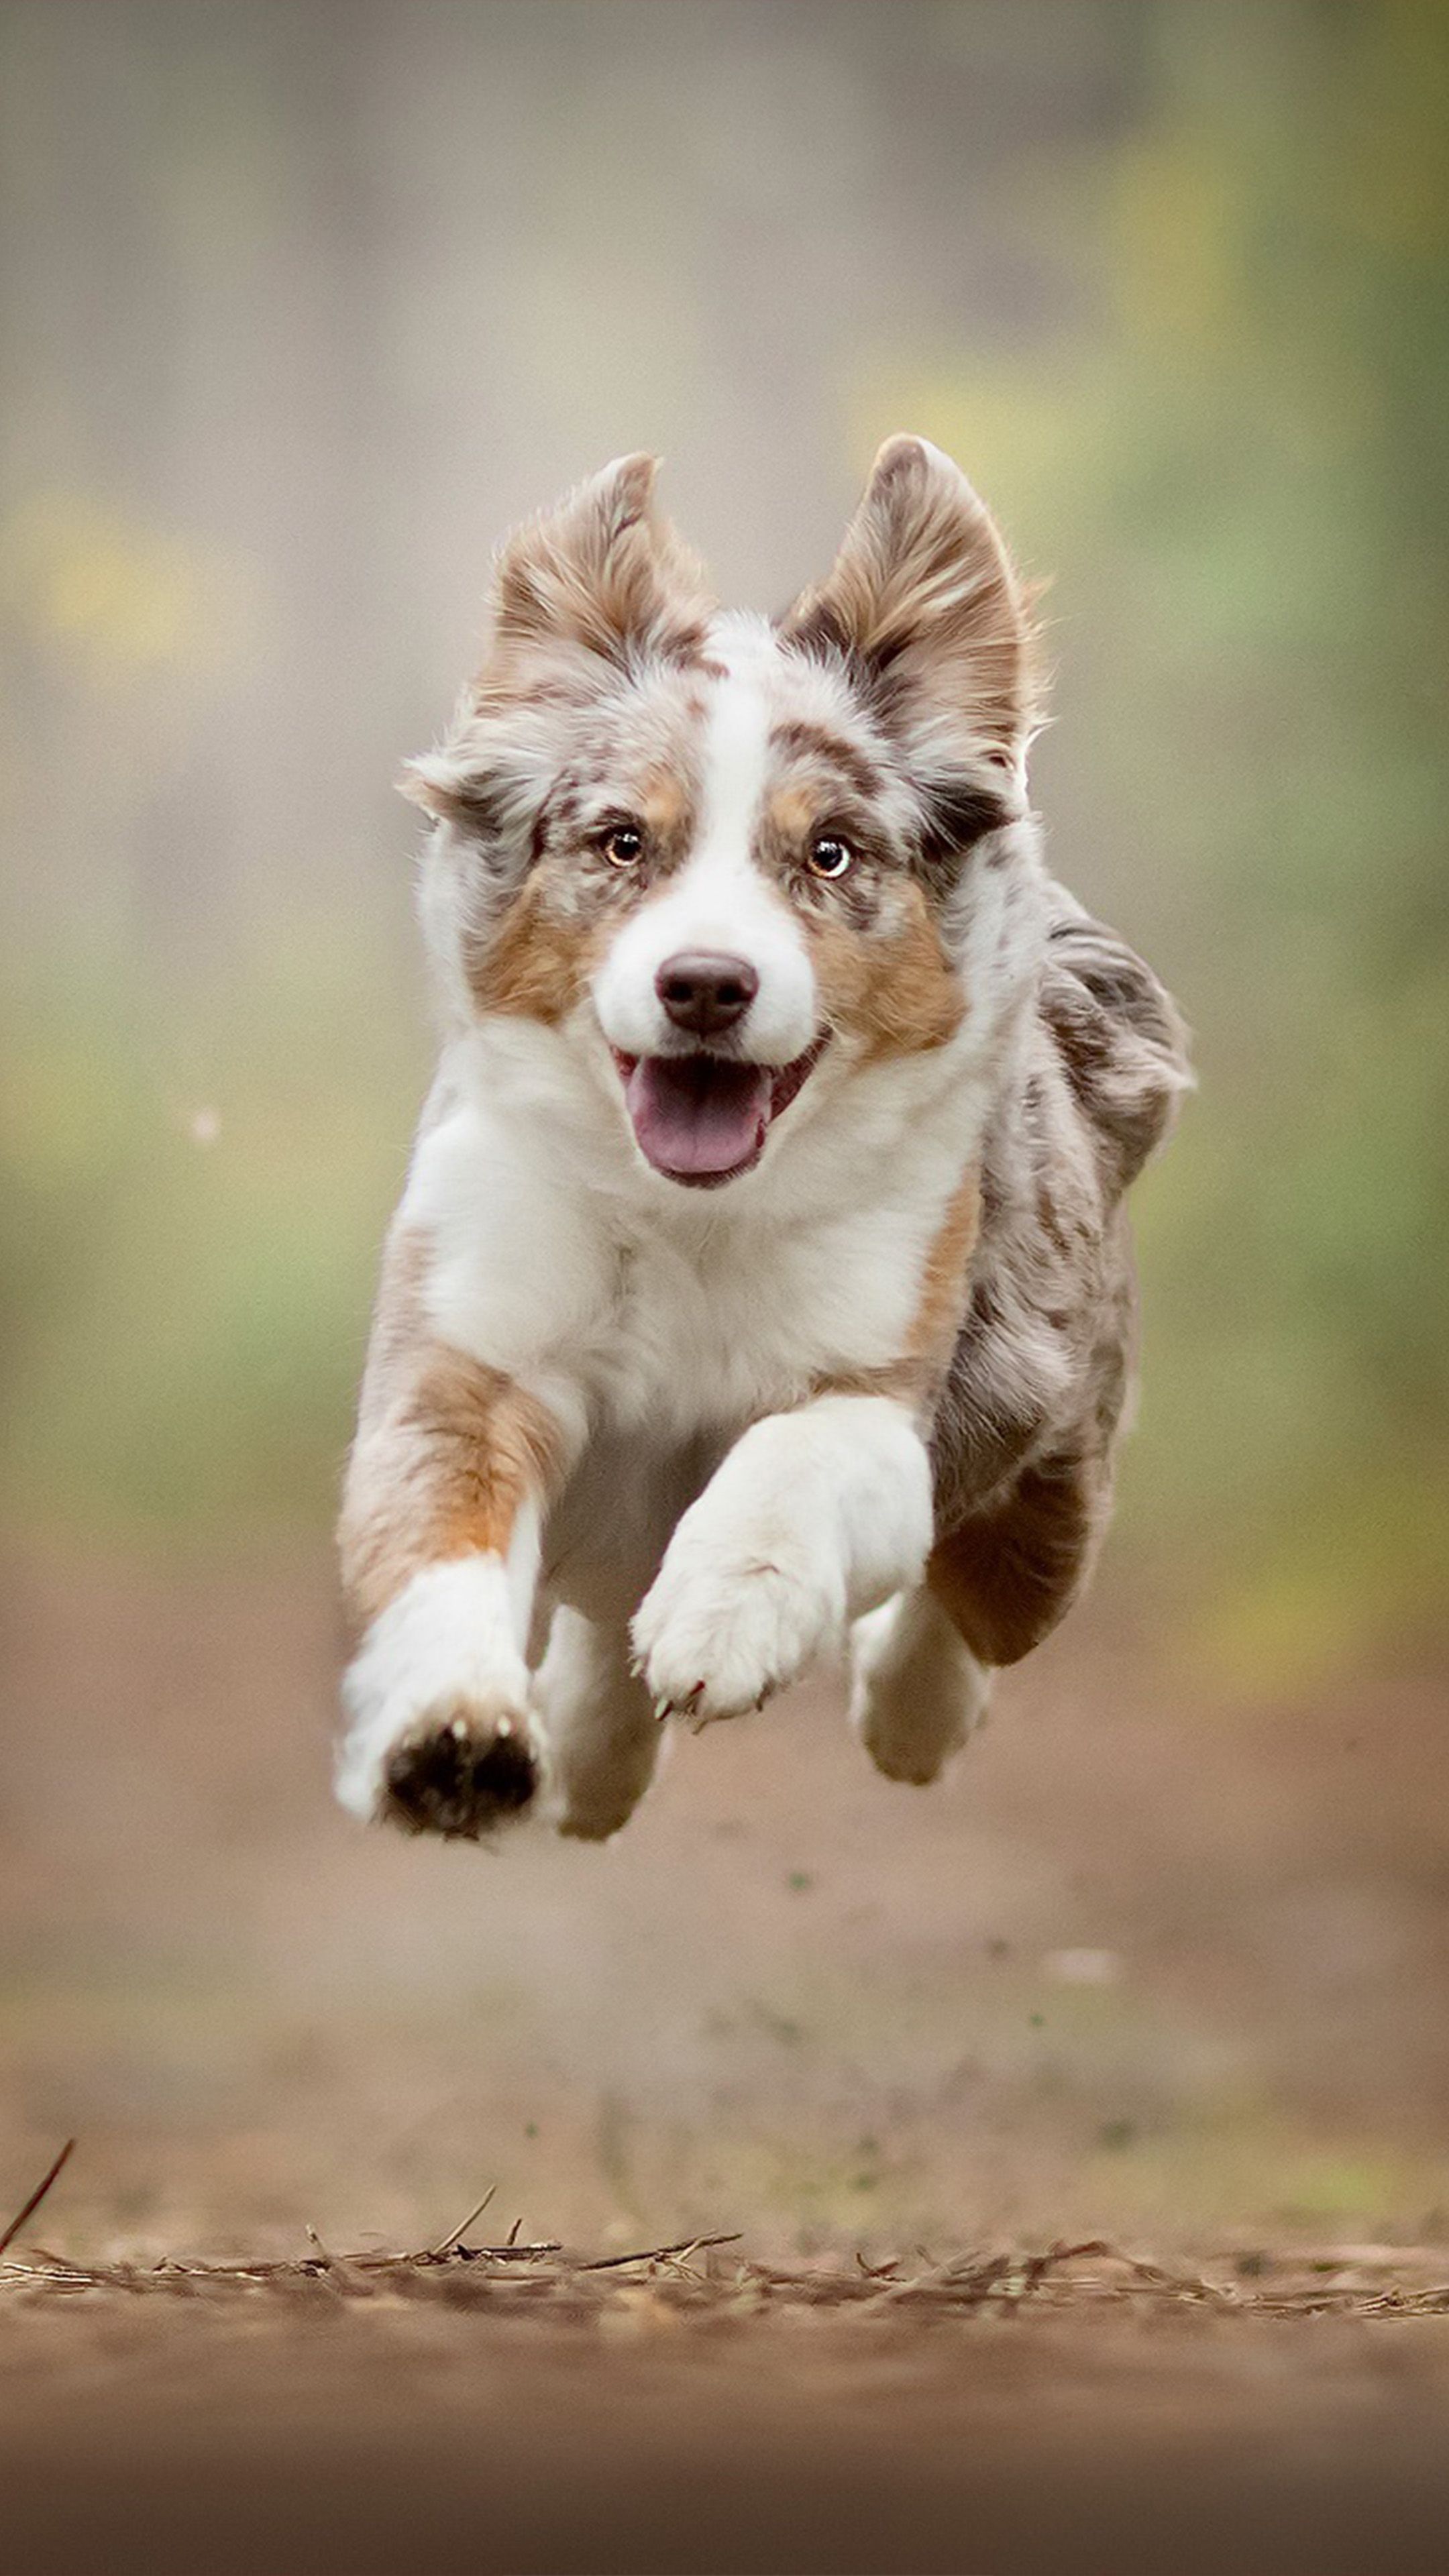 Australian Shepherd Running 4K Ultra HD Mobile Wallpaper. Dog breeds, Shepherd dog breeds, Cute dogs and puppies